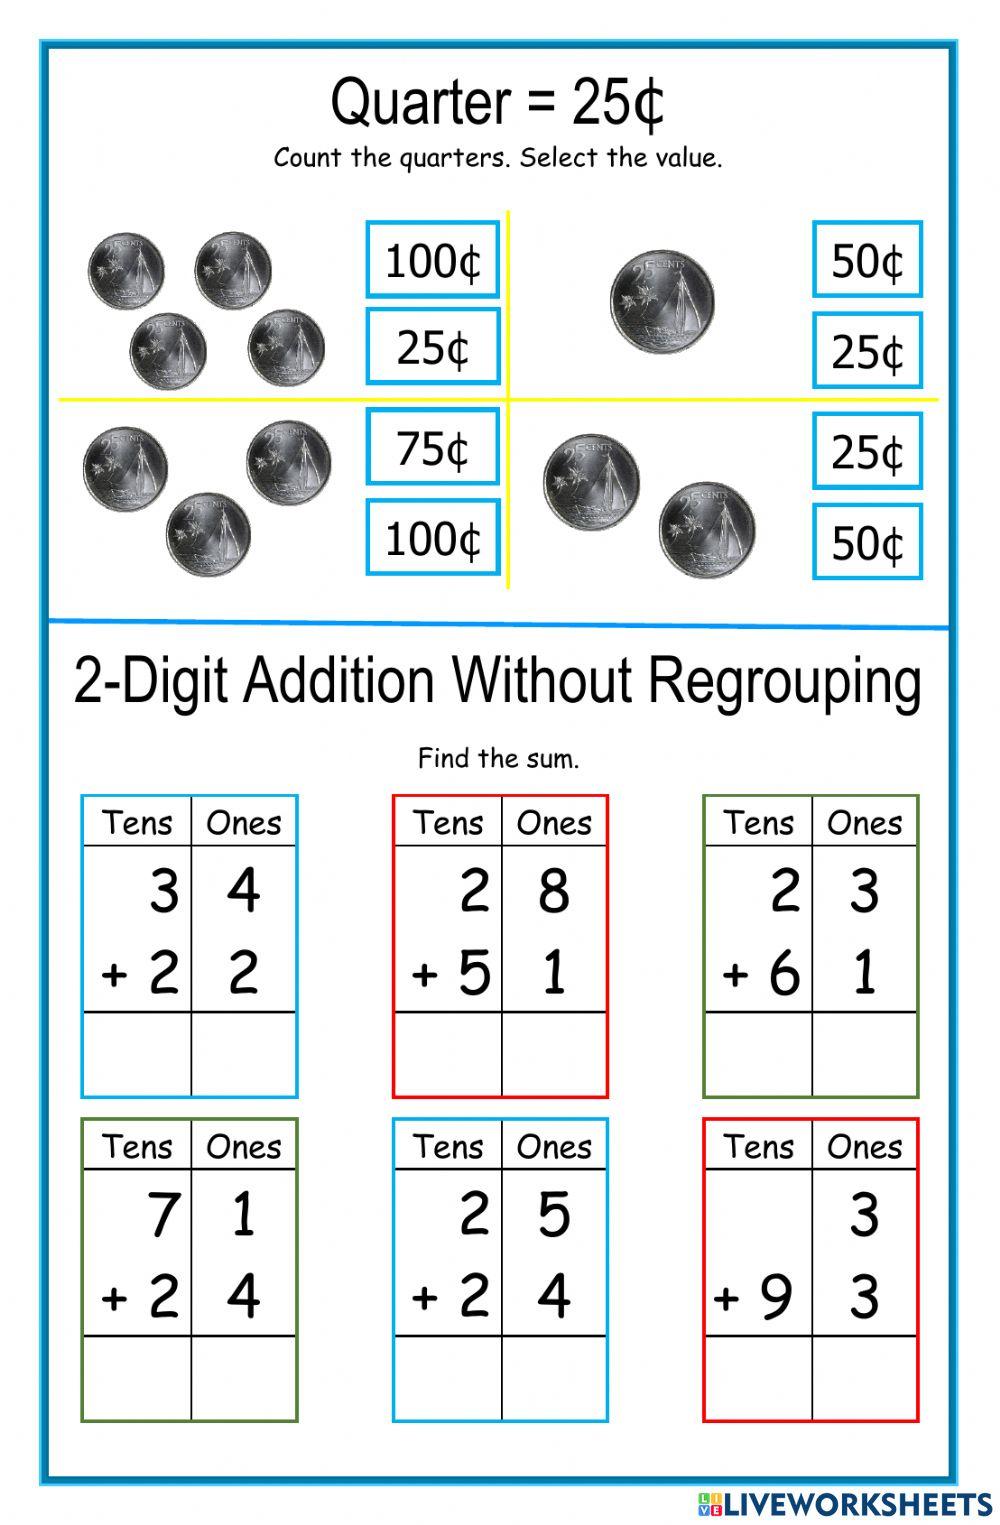 Quarters - 2-digit addition DJ